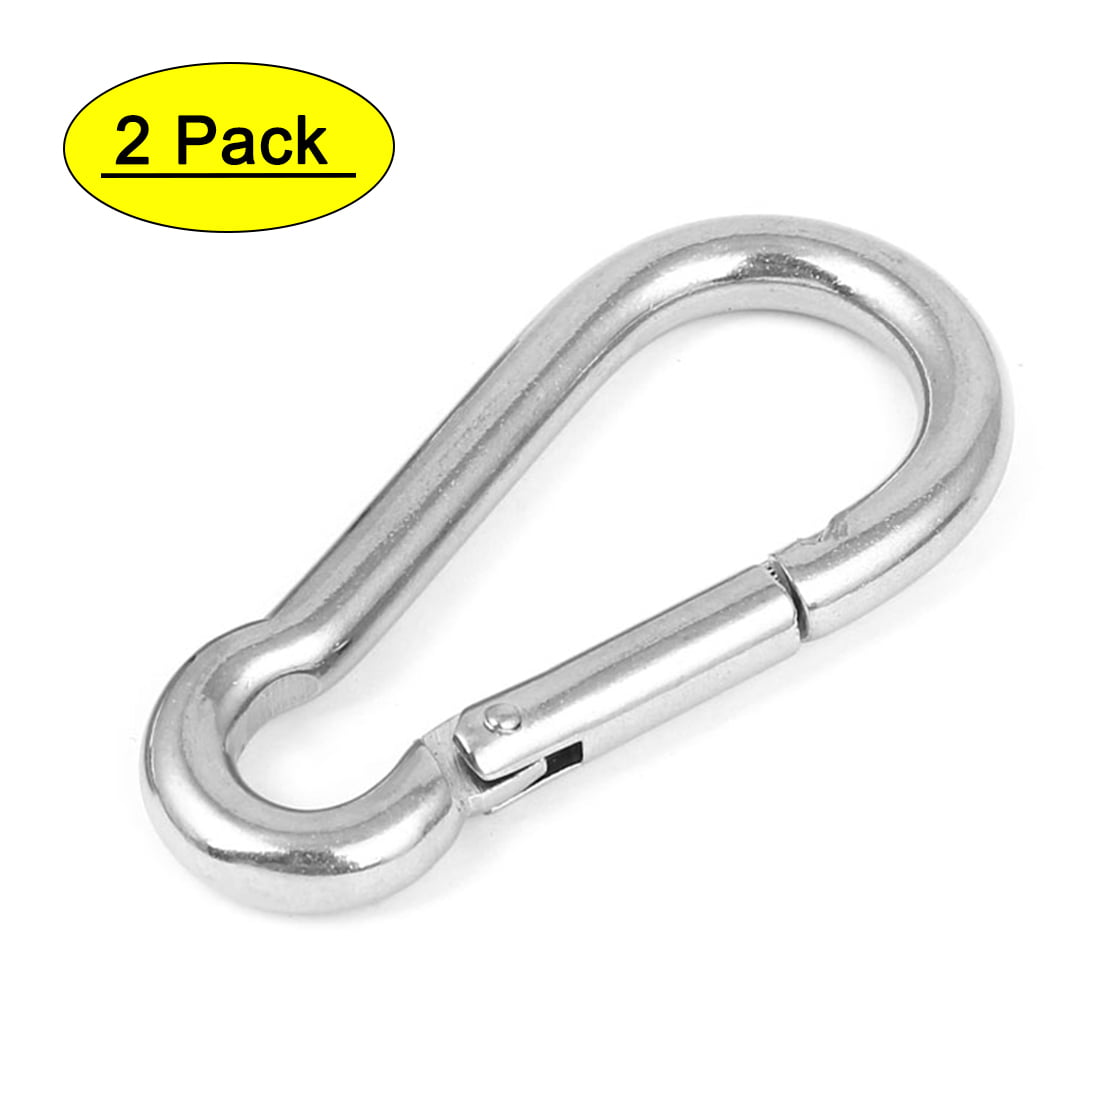 6/10pc Aluminum D-ring Snap Spring Hook Carabiner Lock Clip Keychain Climbing 